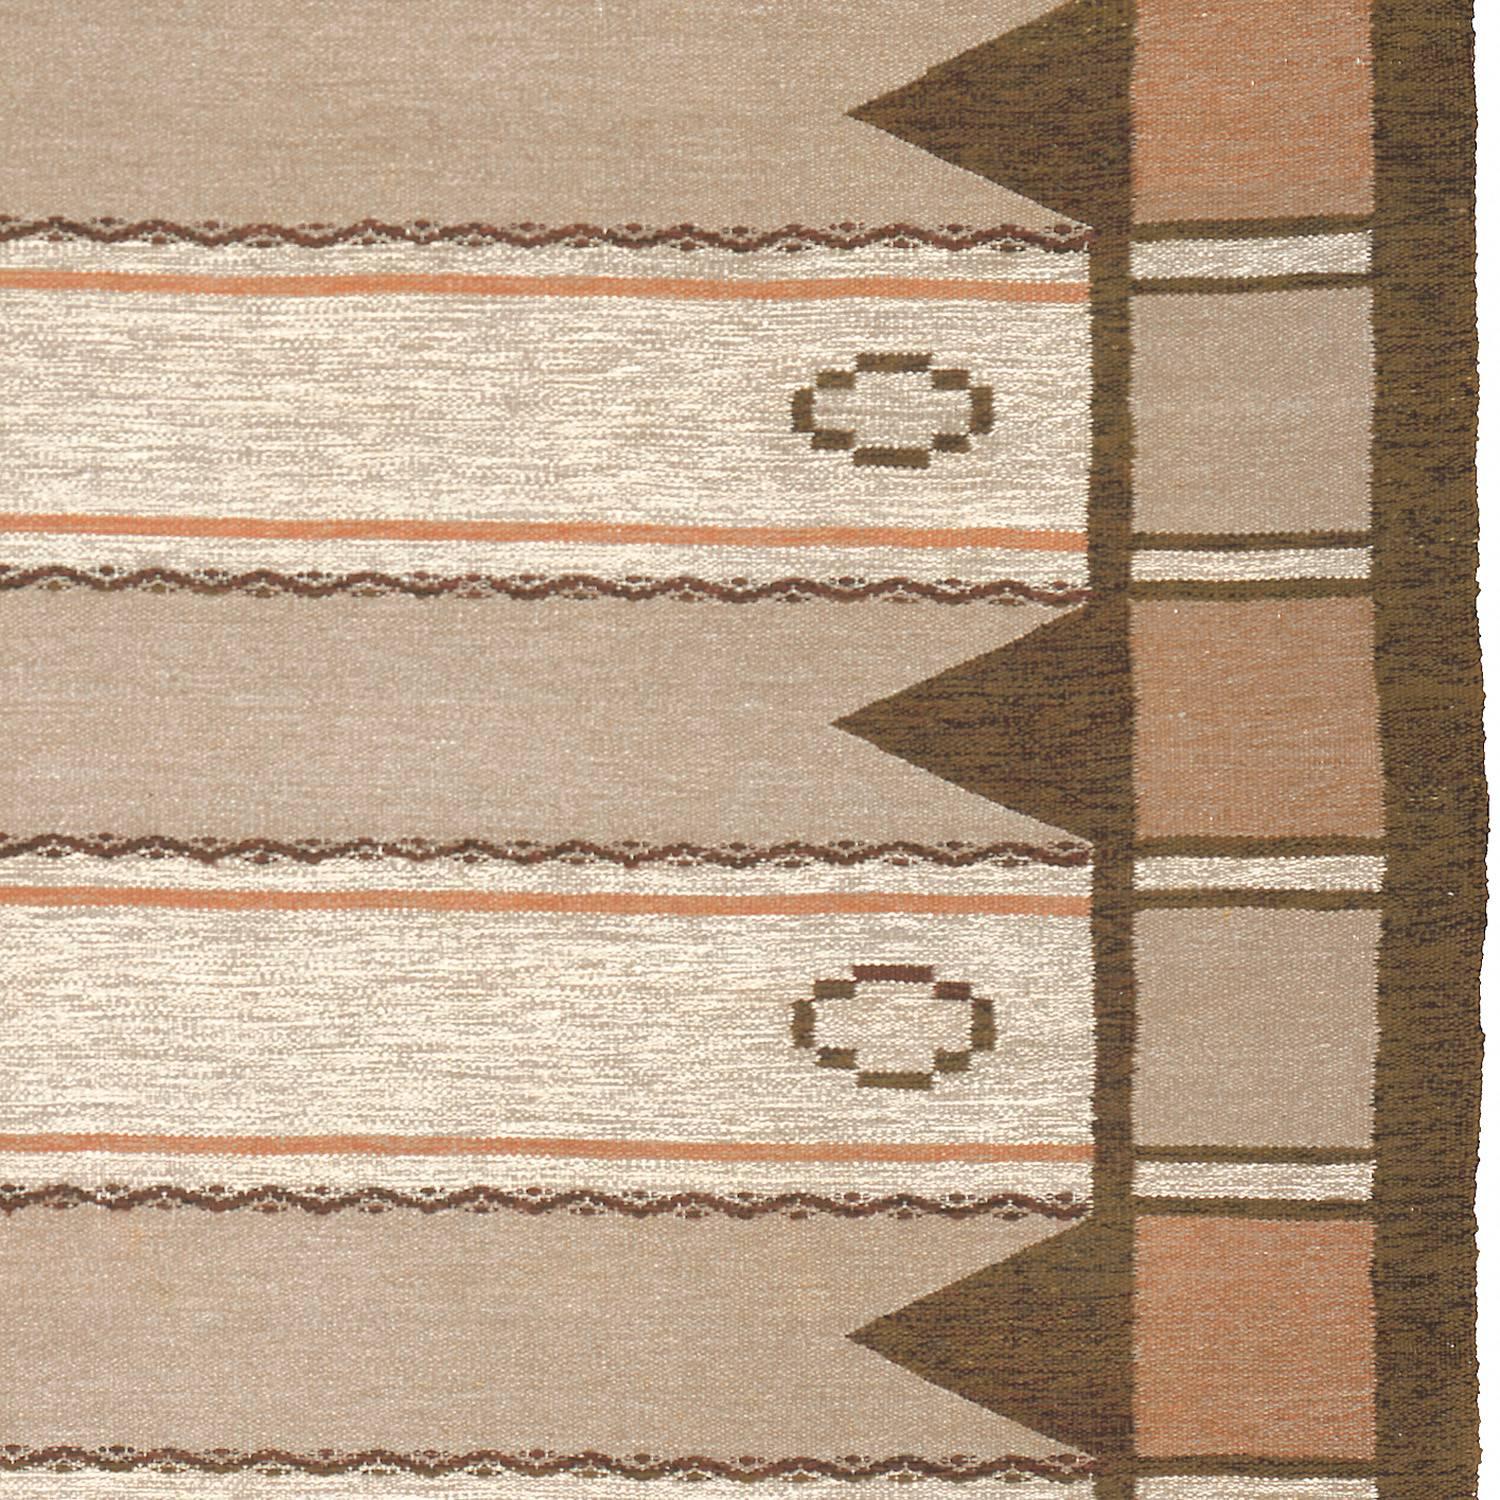 Early 20th century Swedish flat-weave carpet
Sweden ca. 1935